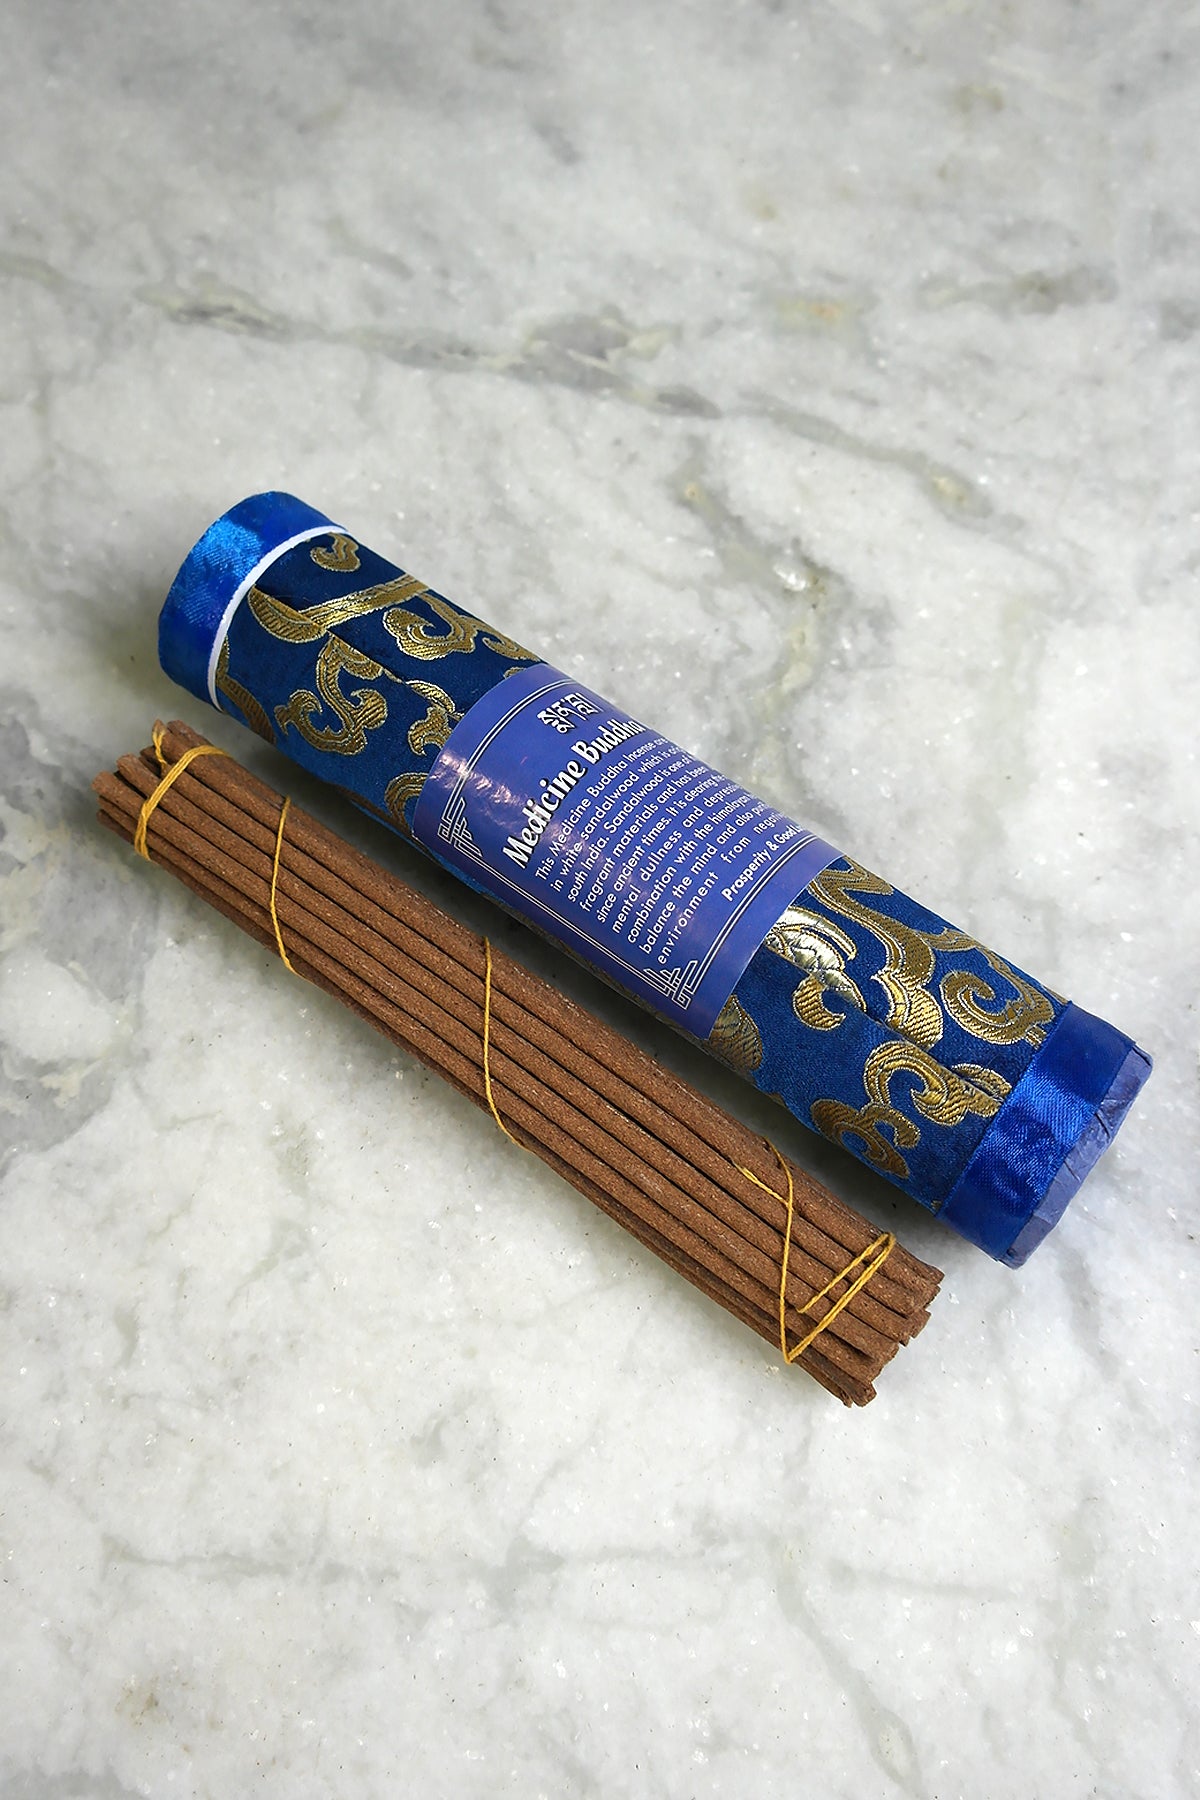 Medicine Buddha Incense in brocade pack